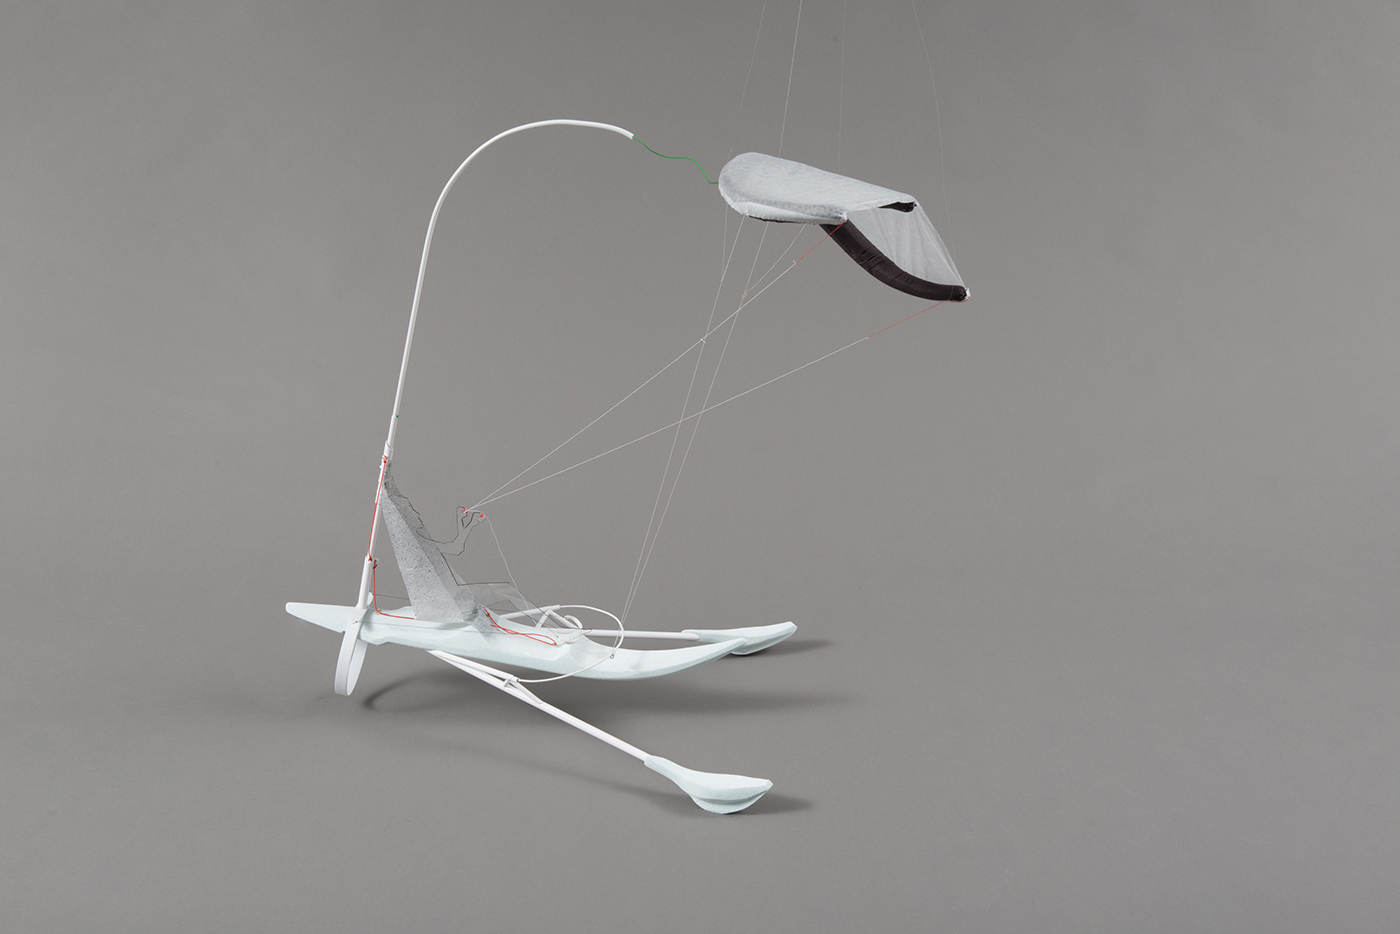 boat foil sailing design product aerodynamic wind technical sea architecture